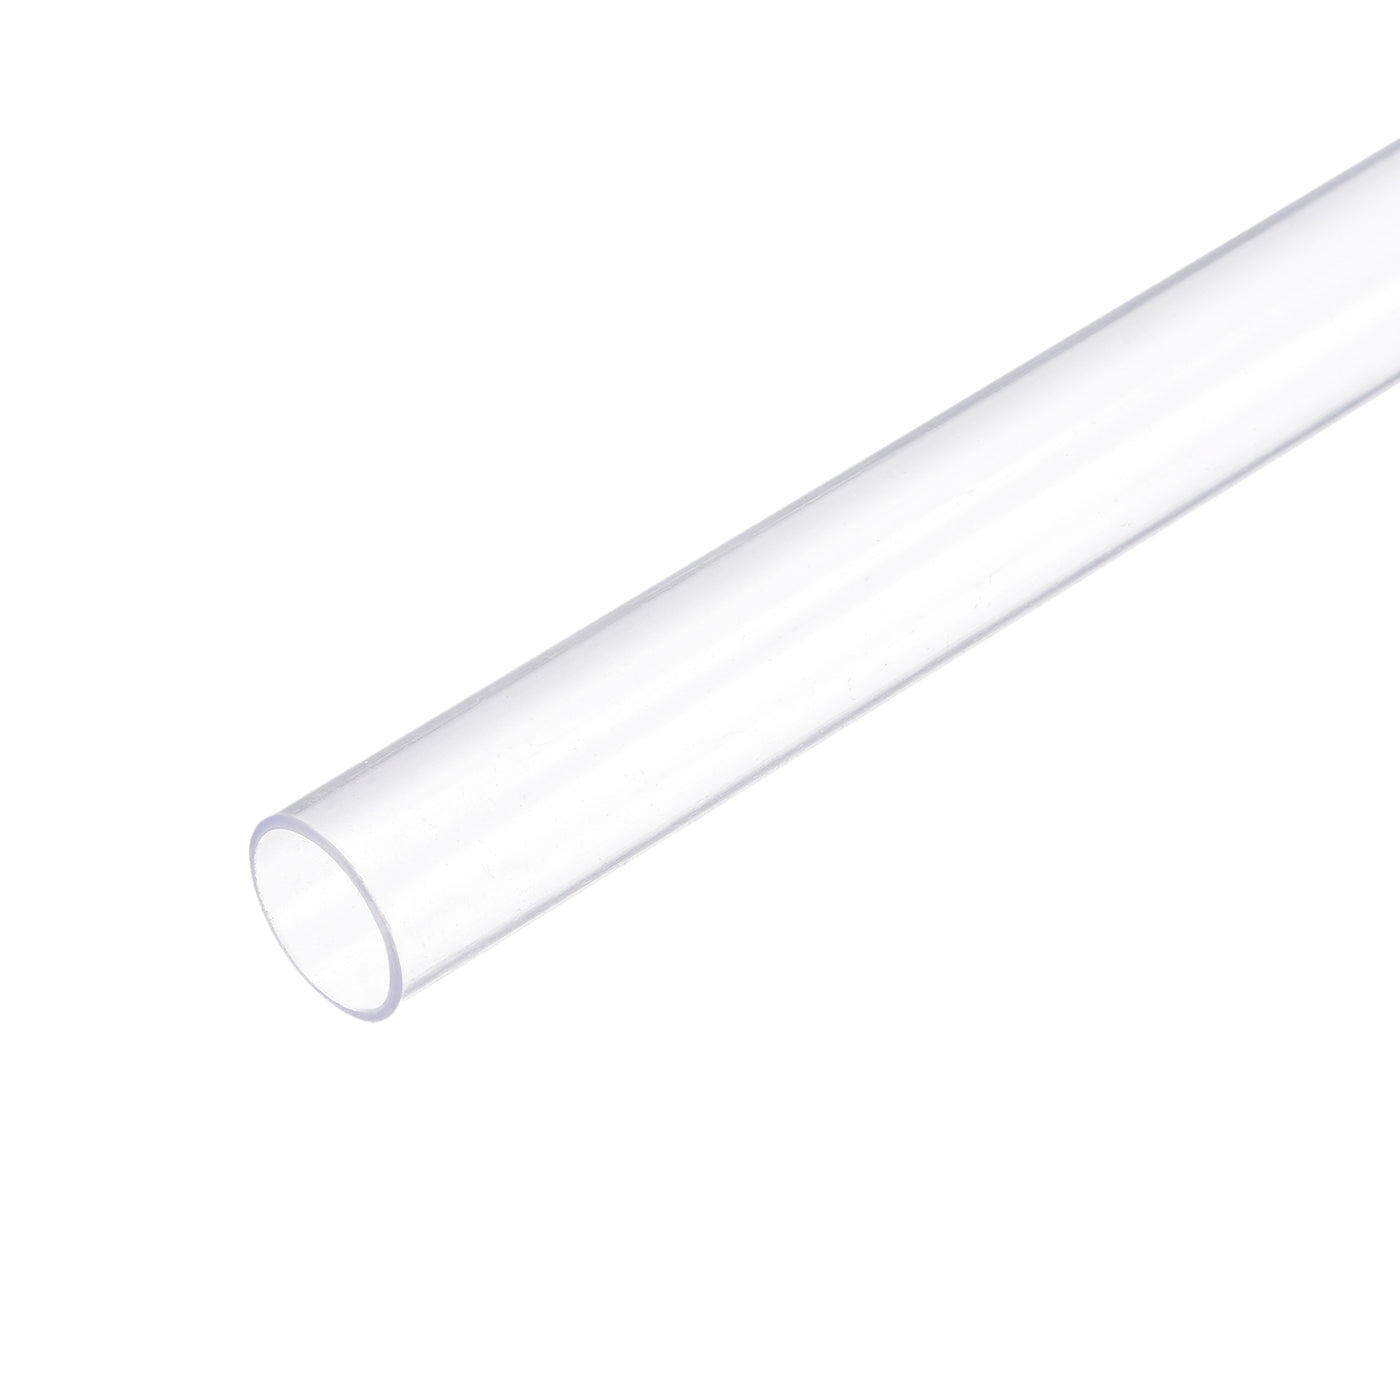 uxcell Uxcell 1Pcs PVC Rigid Round Tubing, 35/64"(14mm) ID x 5/8"(16mm) OD, for Aquariums